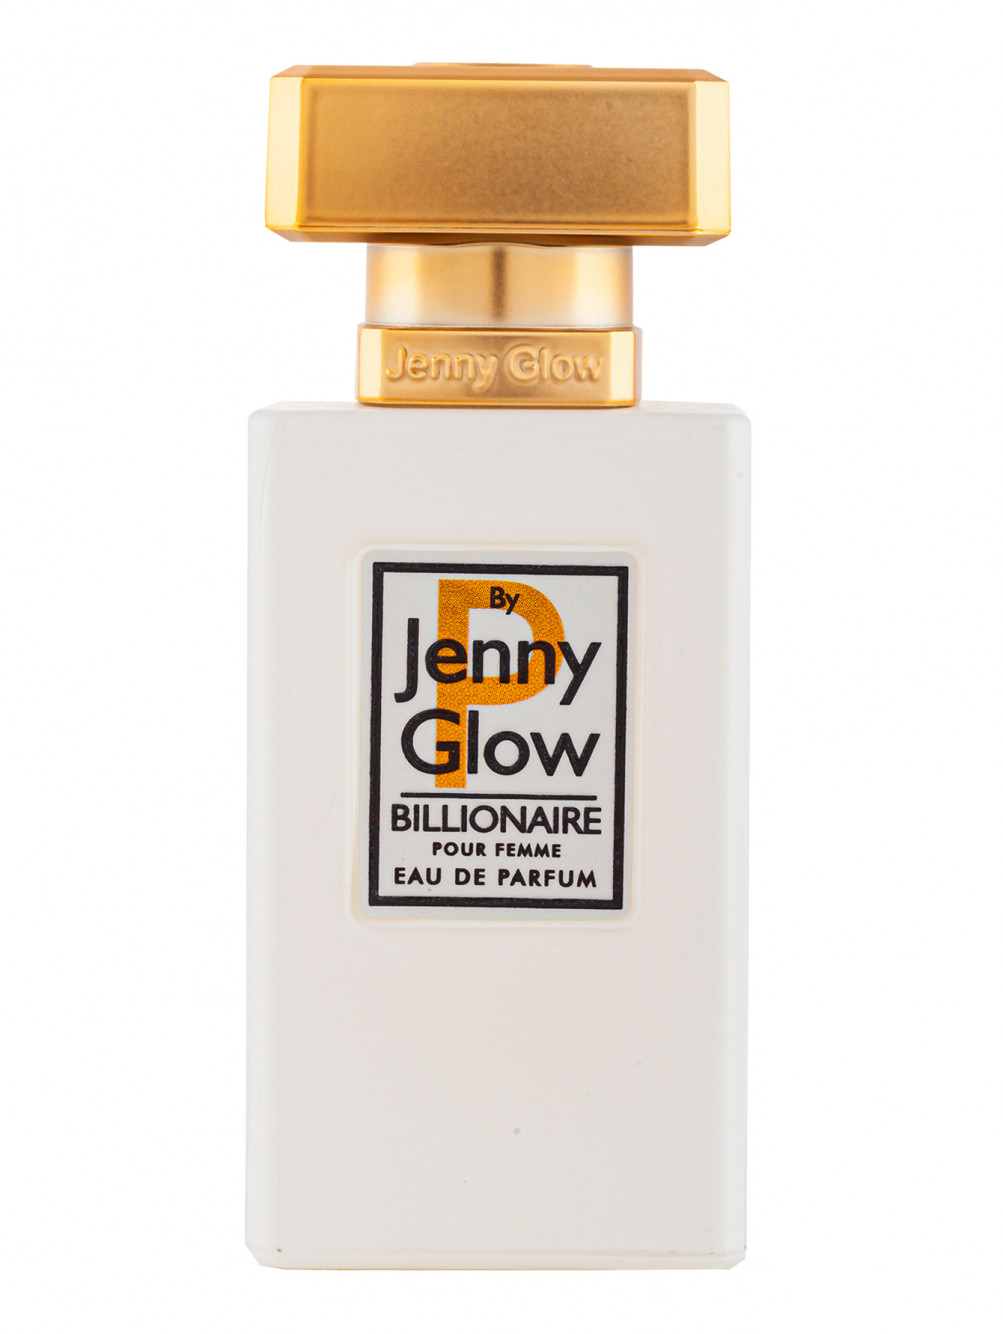 Парфюмерная вода Jenny Glow Billionaire Pour Femme, 30 мл - Общий вид